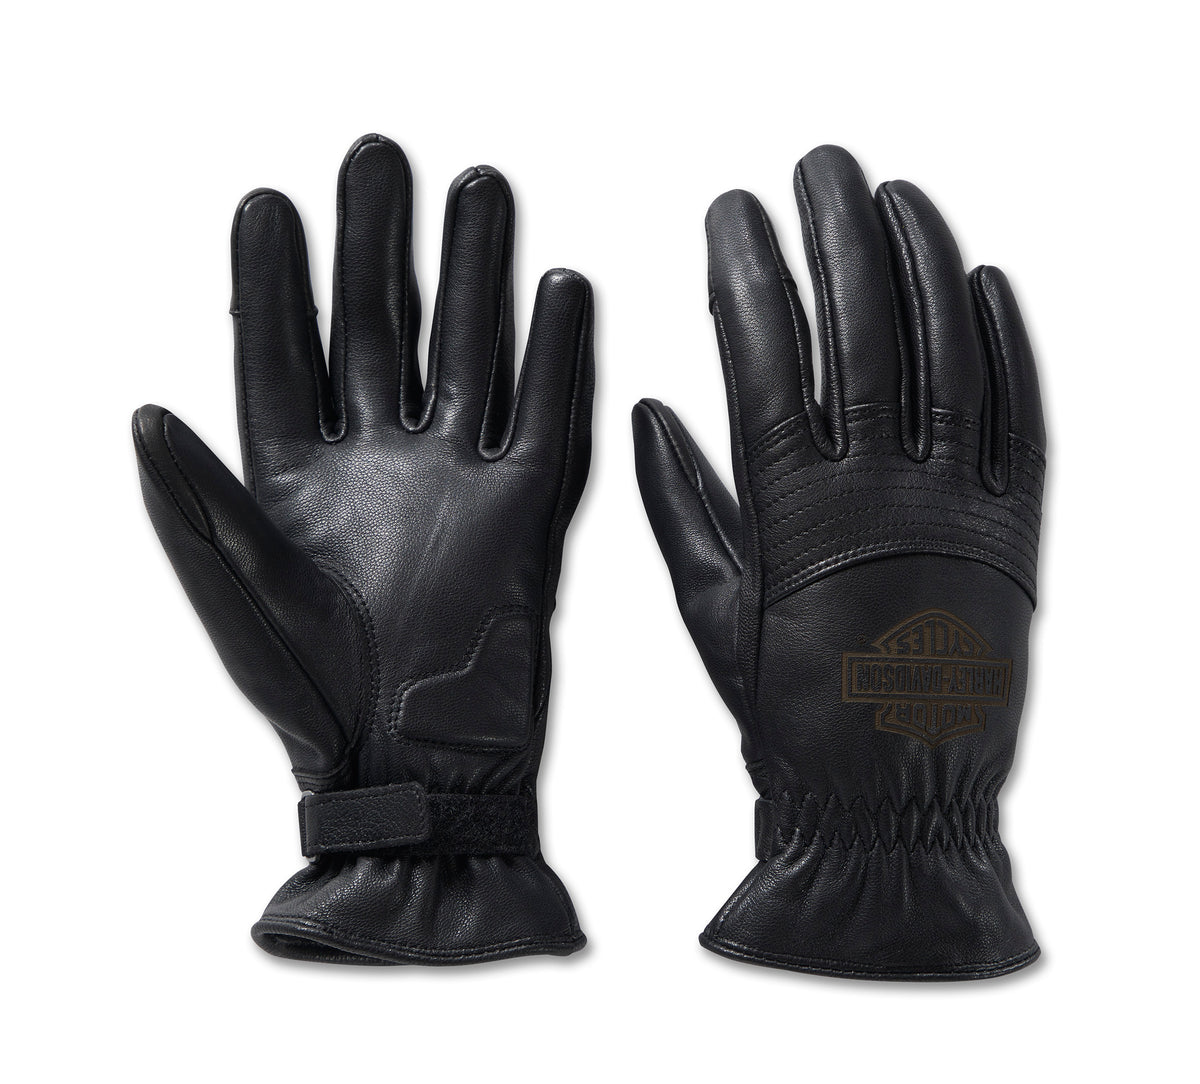 Harley-Davidson Women's Helm Leather Work Gloves - Black